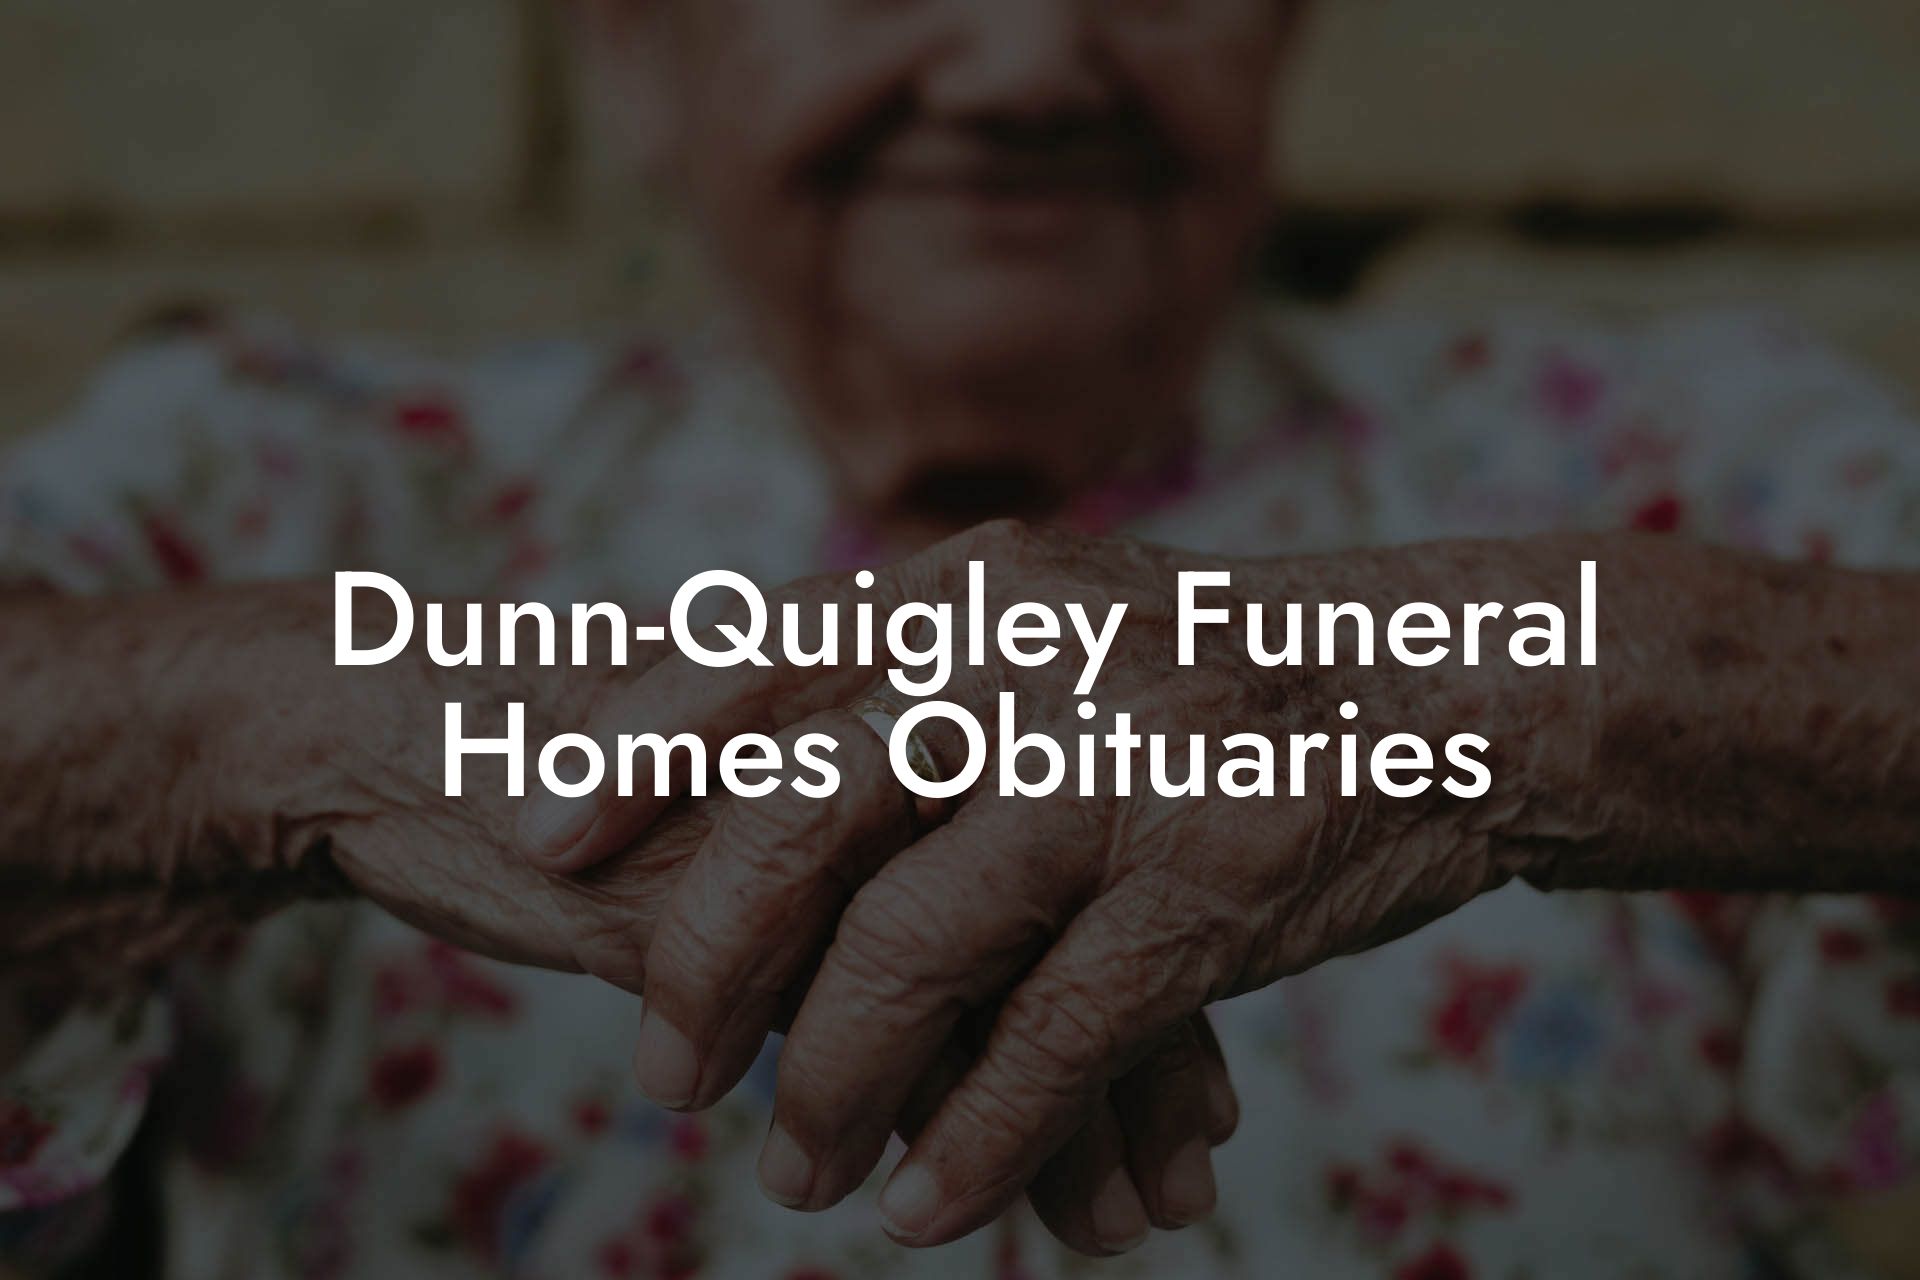 Dunn-Quigley Funeral Homes Obituaries